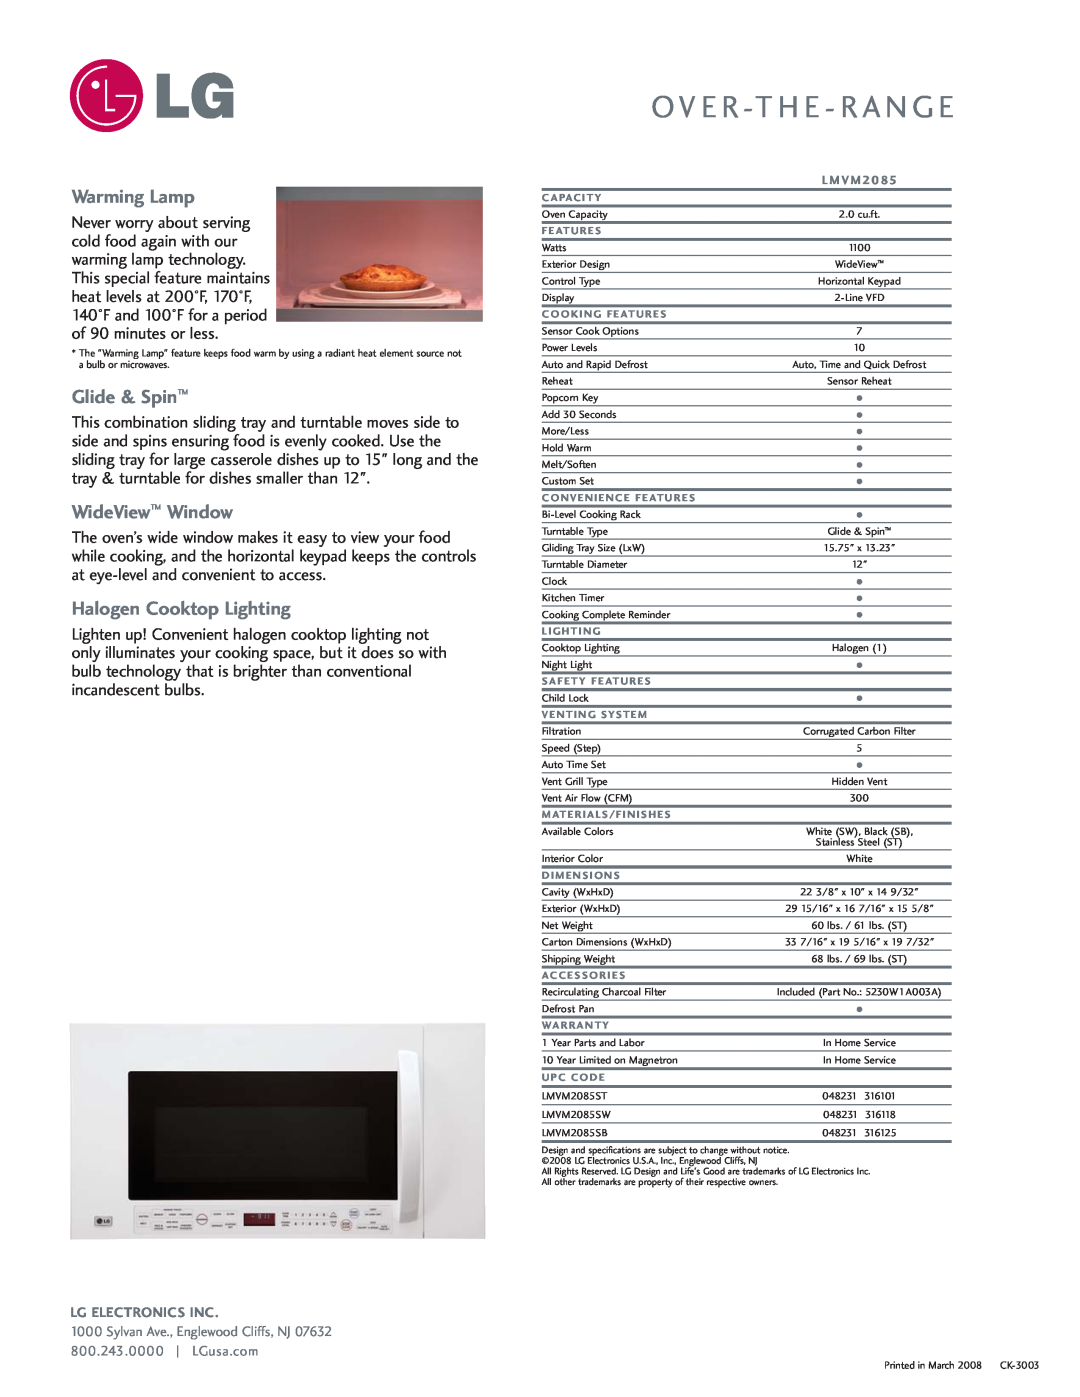 LG Electronics LMVM2085SB Warming Lamp, Glide & Spin, WideView Window, Halogen Cooktop Lighting, O V E R -Th E - R A N G E 